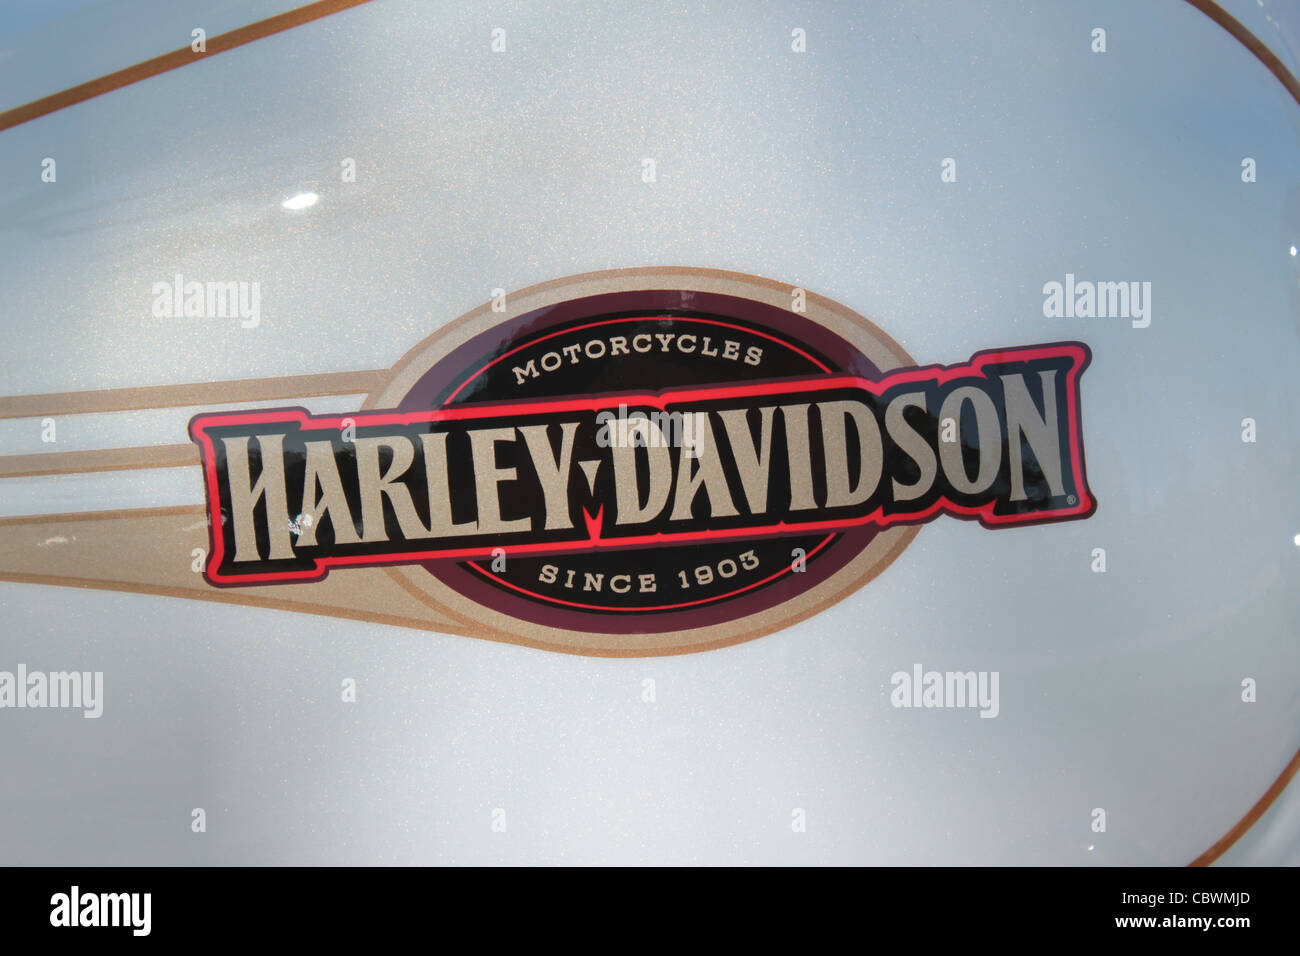 Harley Davidson logo Stock Photo